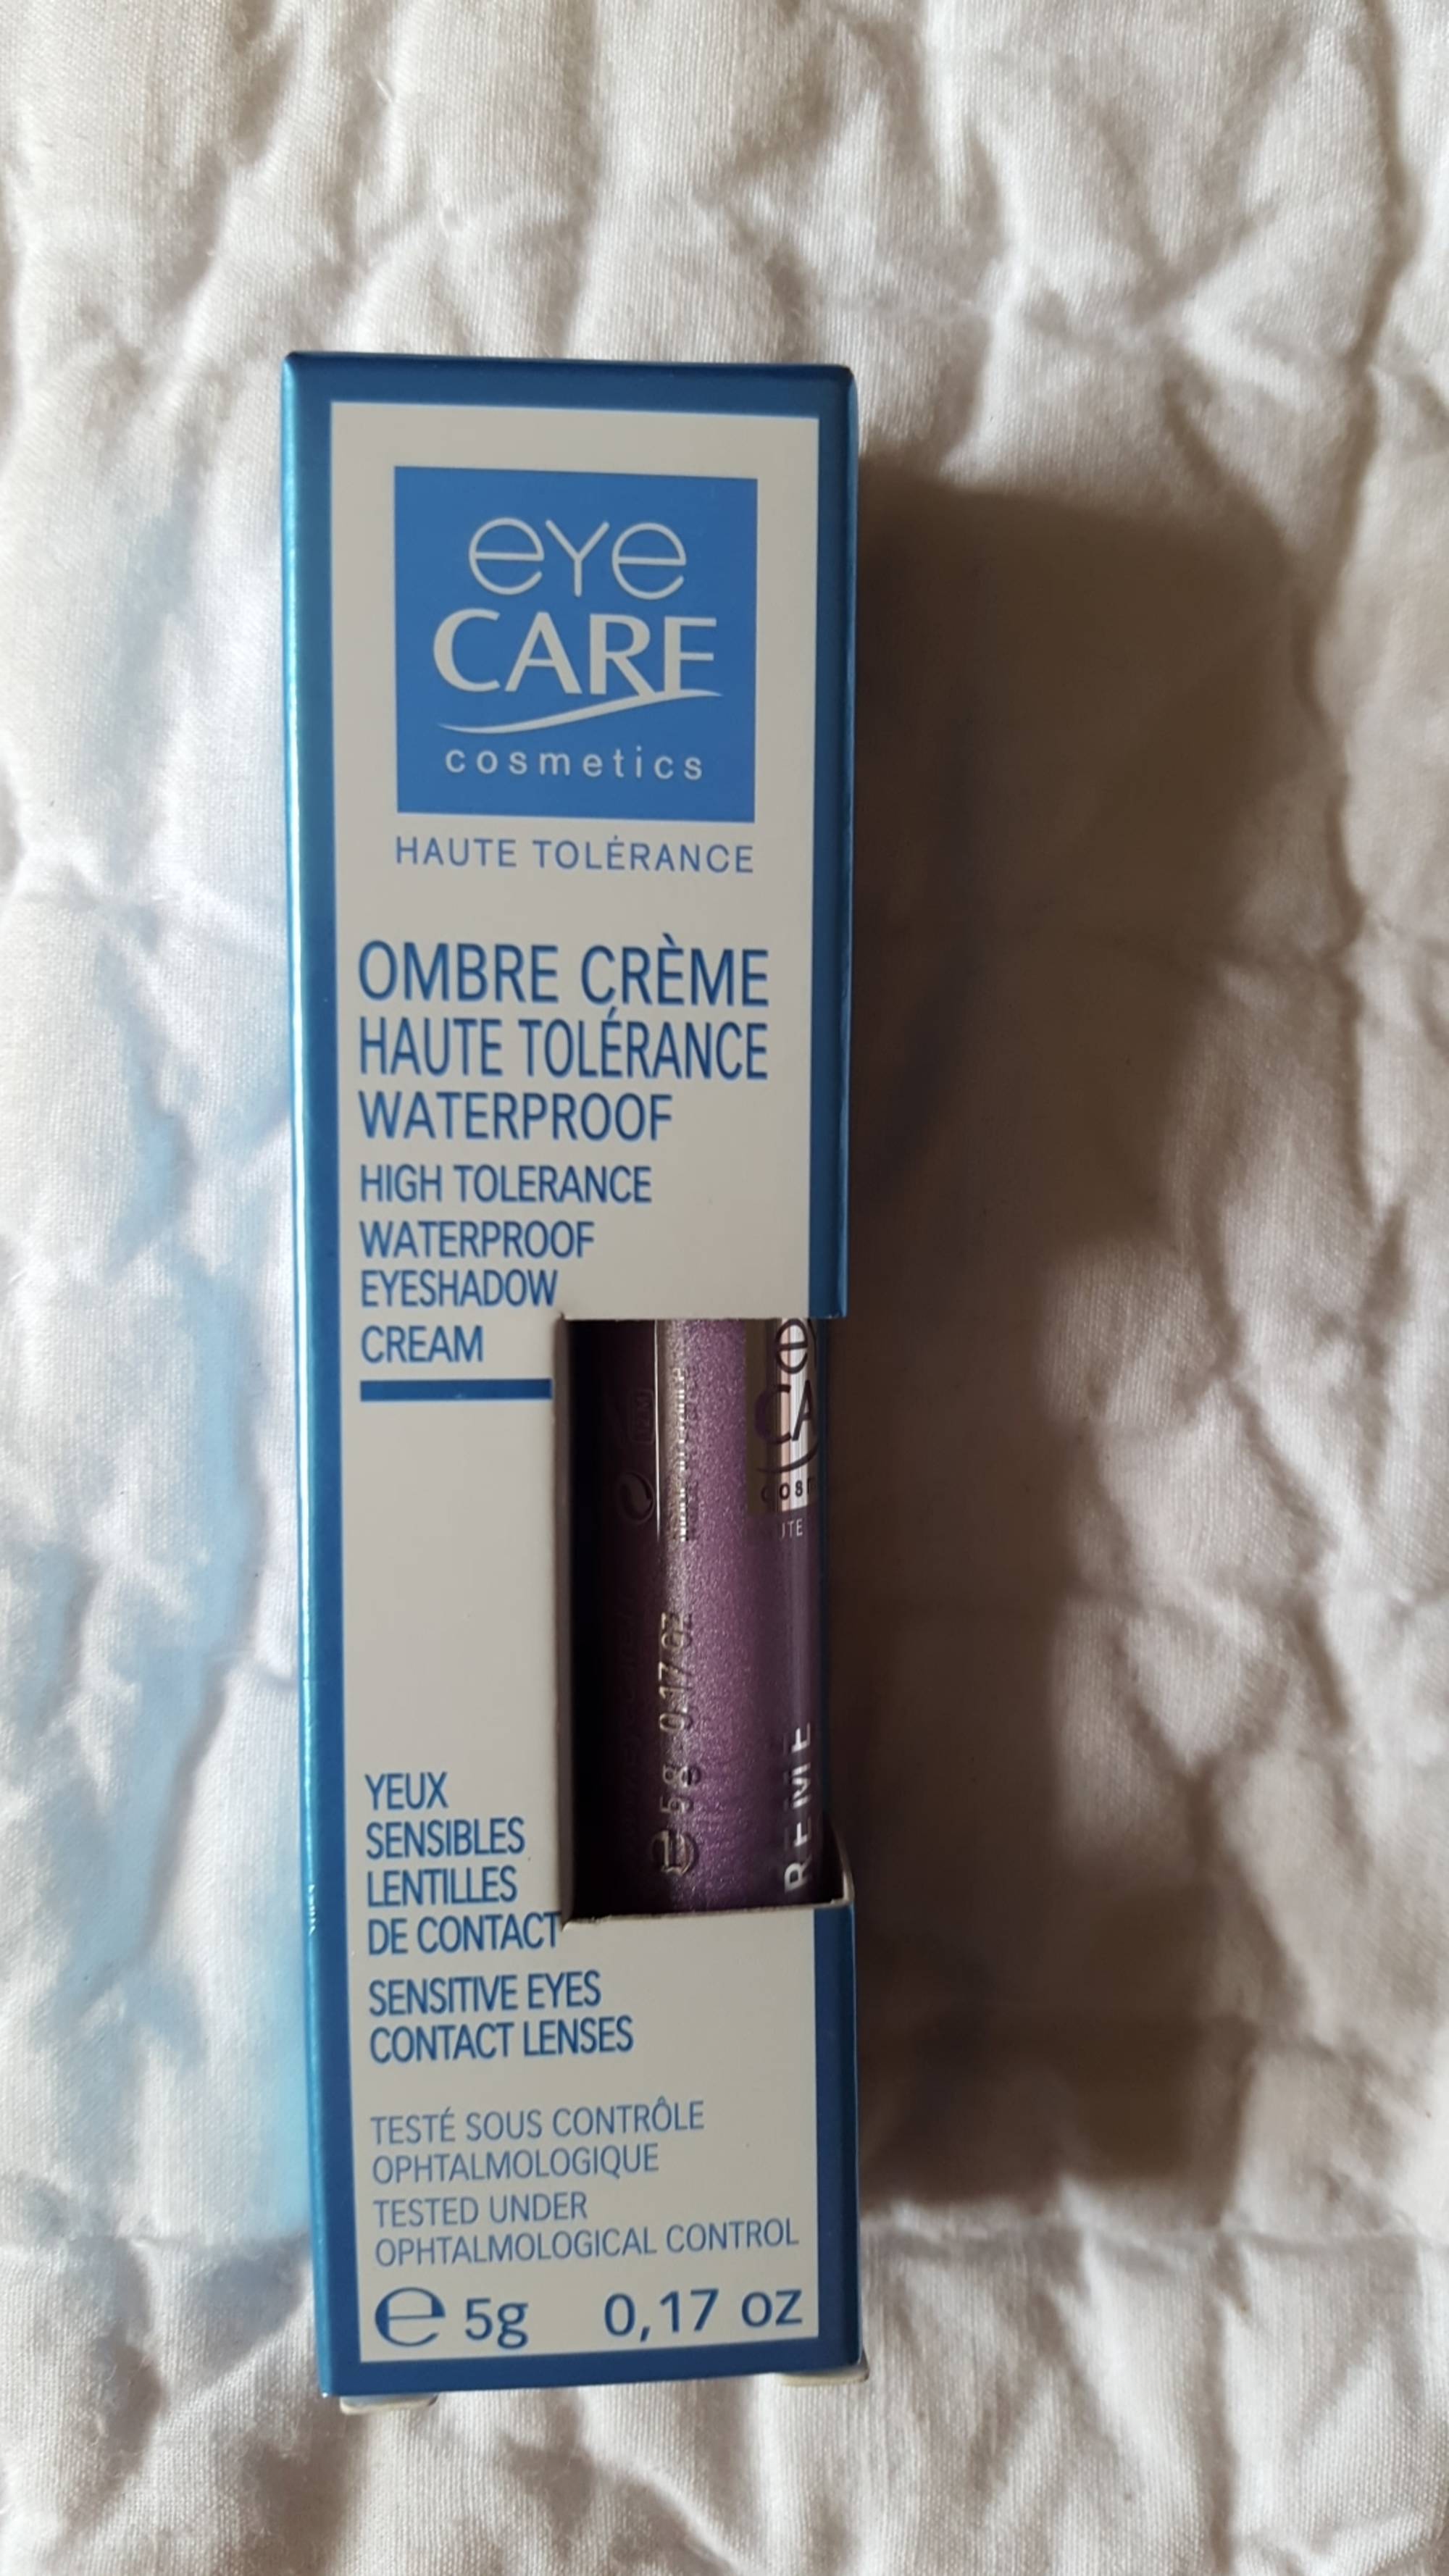 EYE CARE - Ombre crème haute tolérance